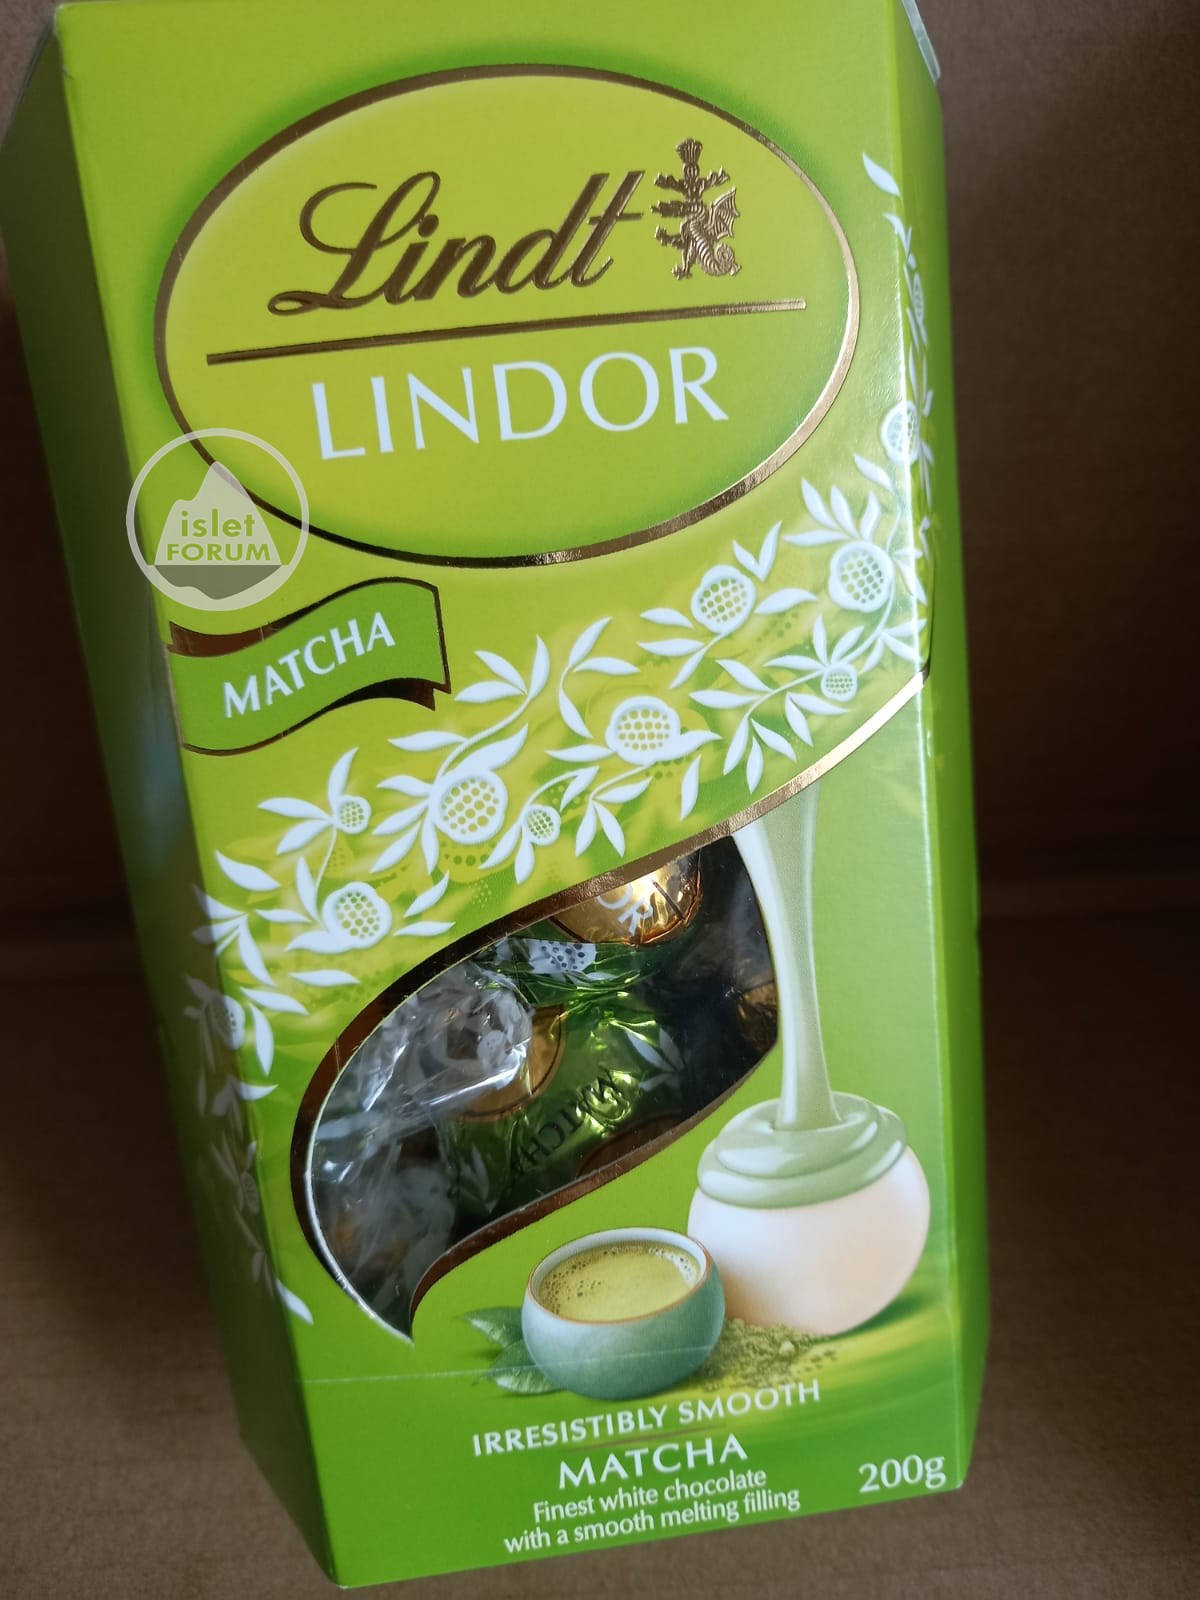 Lindt Lindor Matcha finest white chocolate (1).jpeg